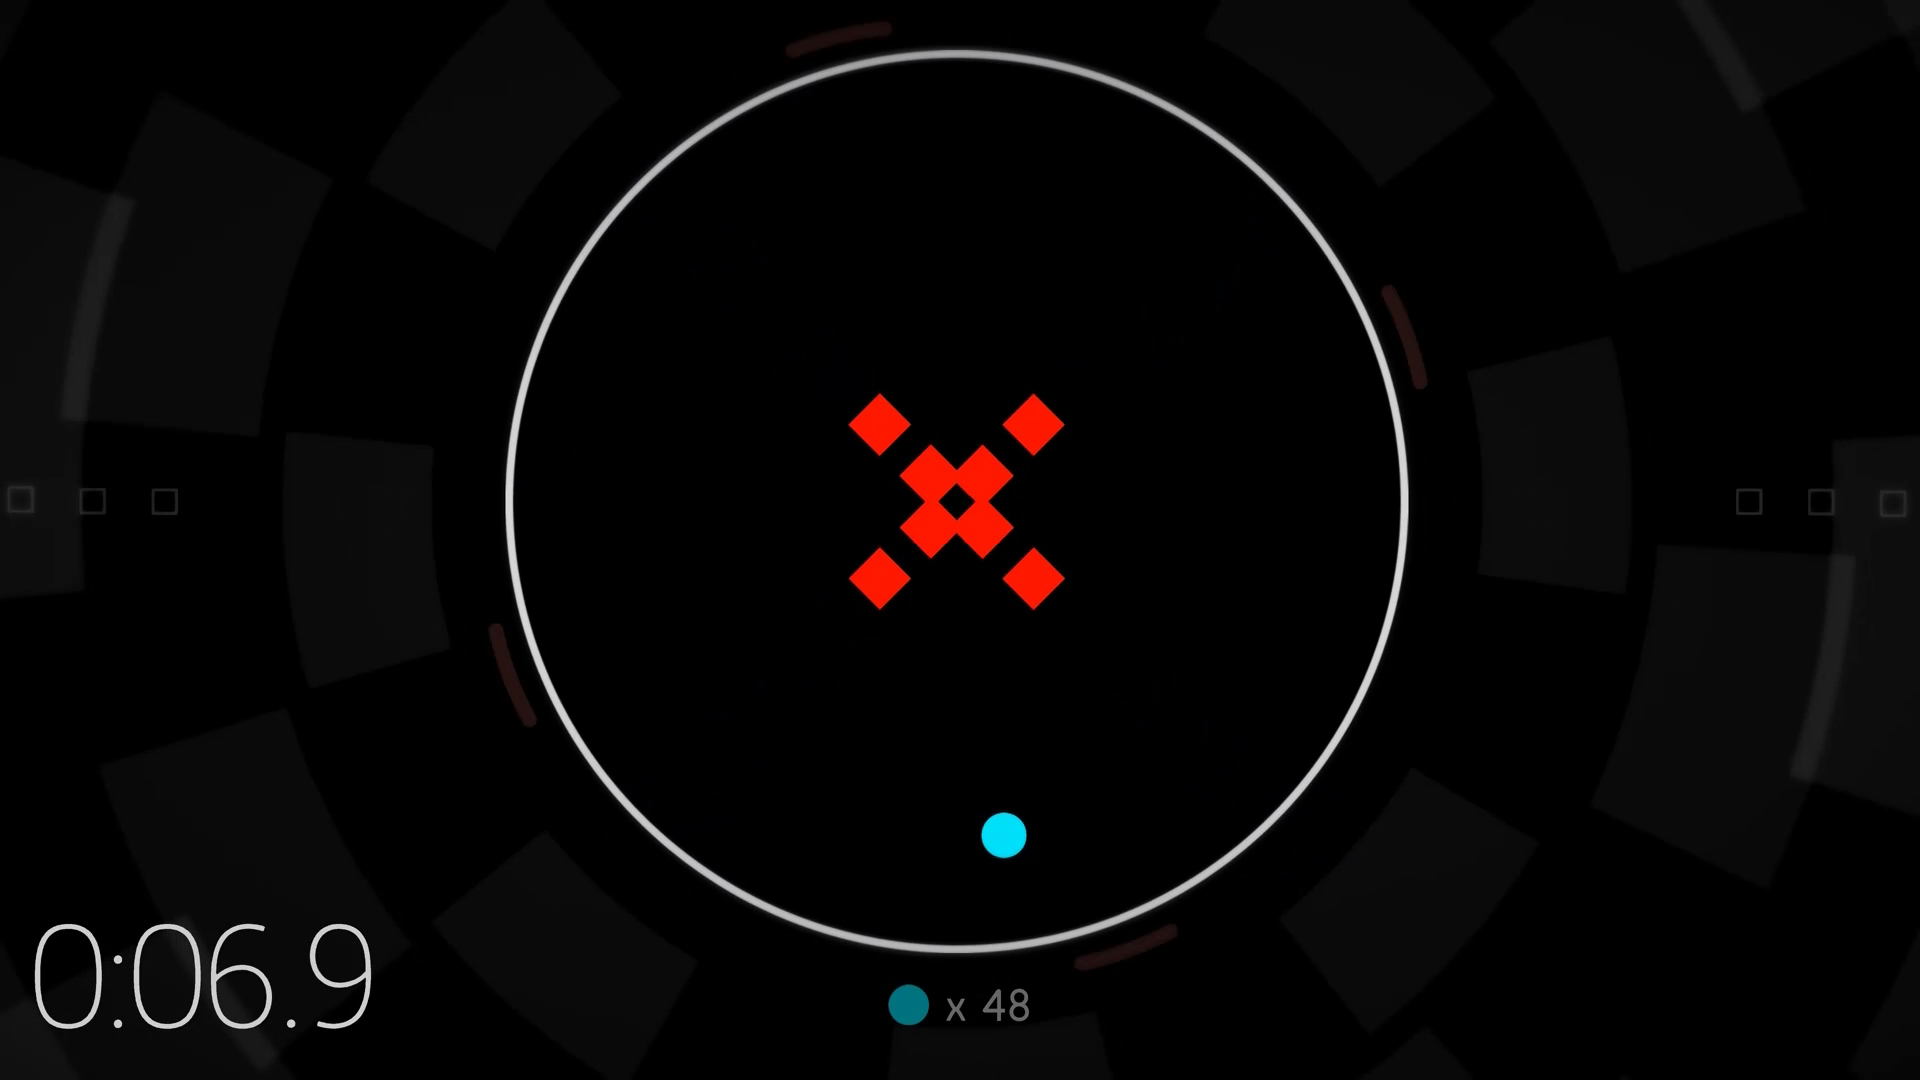 HyperDot のスクリーンショット。画面の左下隅にあるタイマーは、ゲームプレイの残りが 6.9 秒であることを示します。